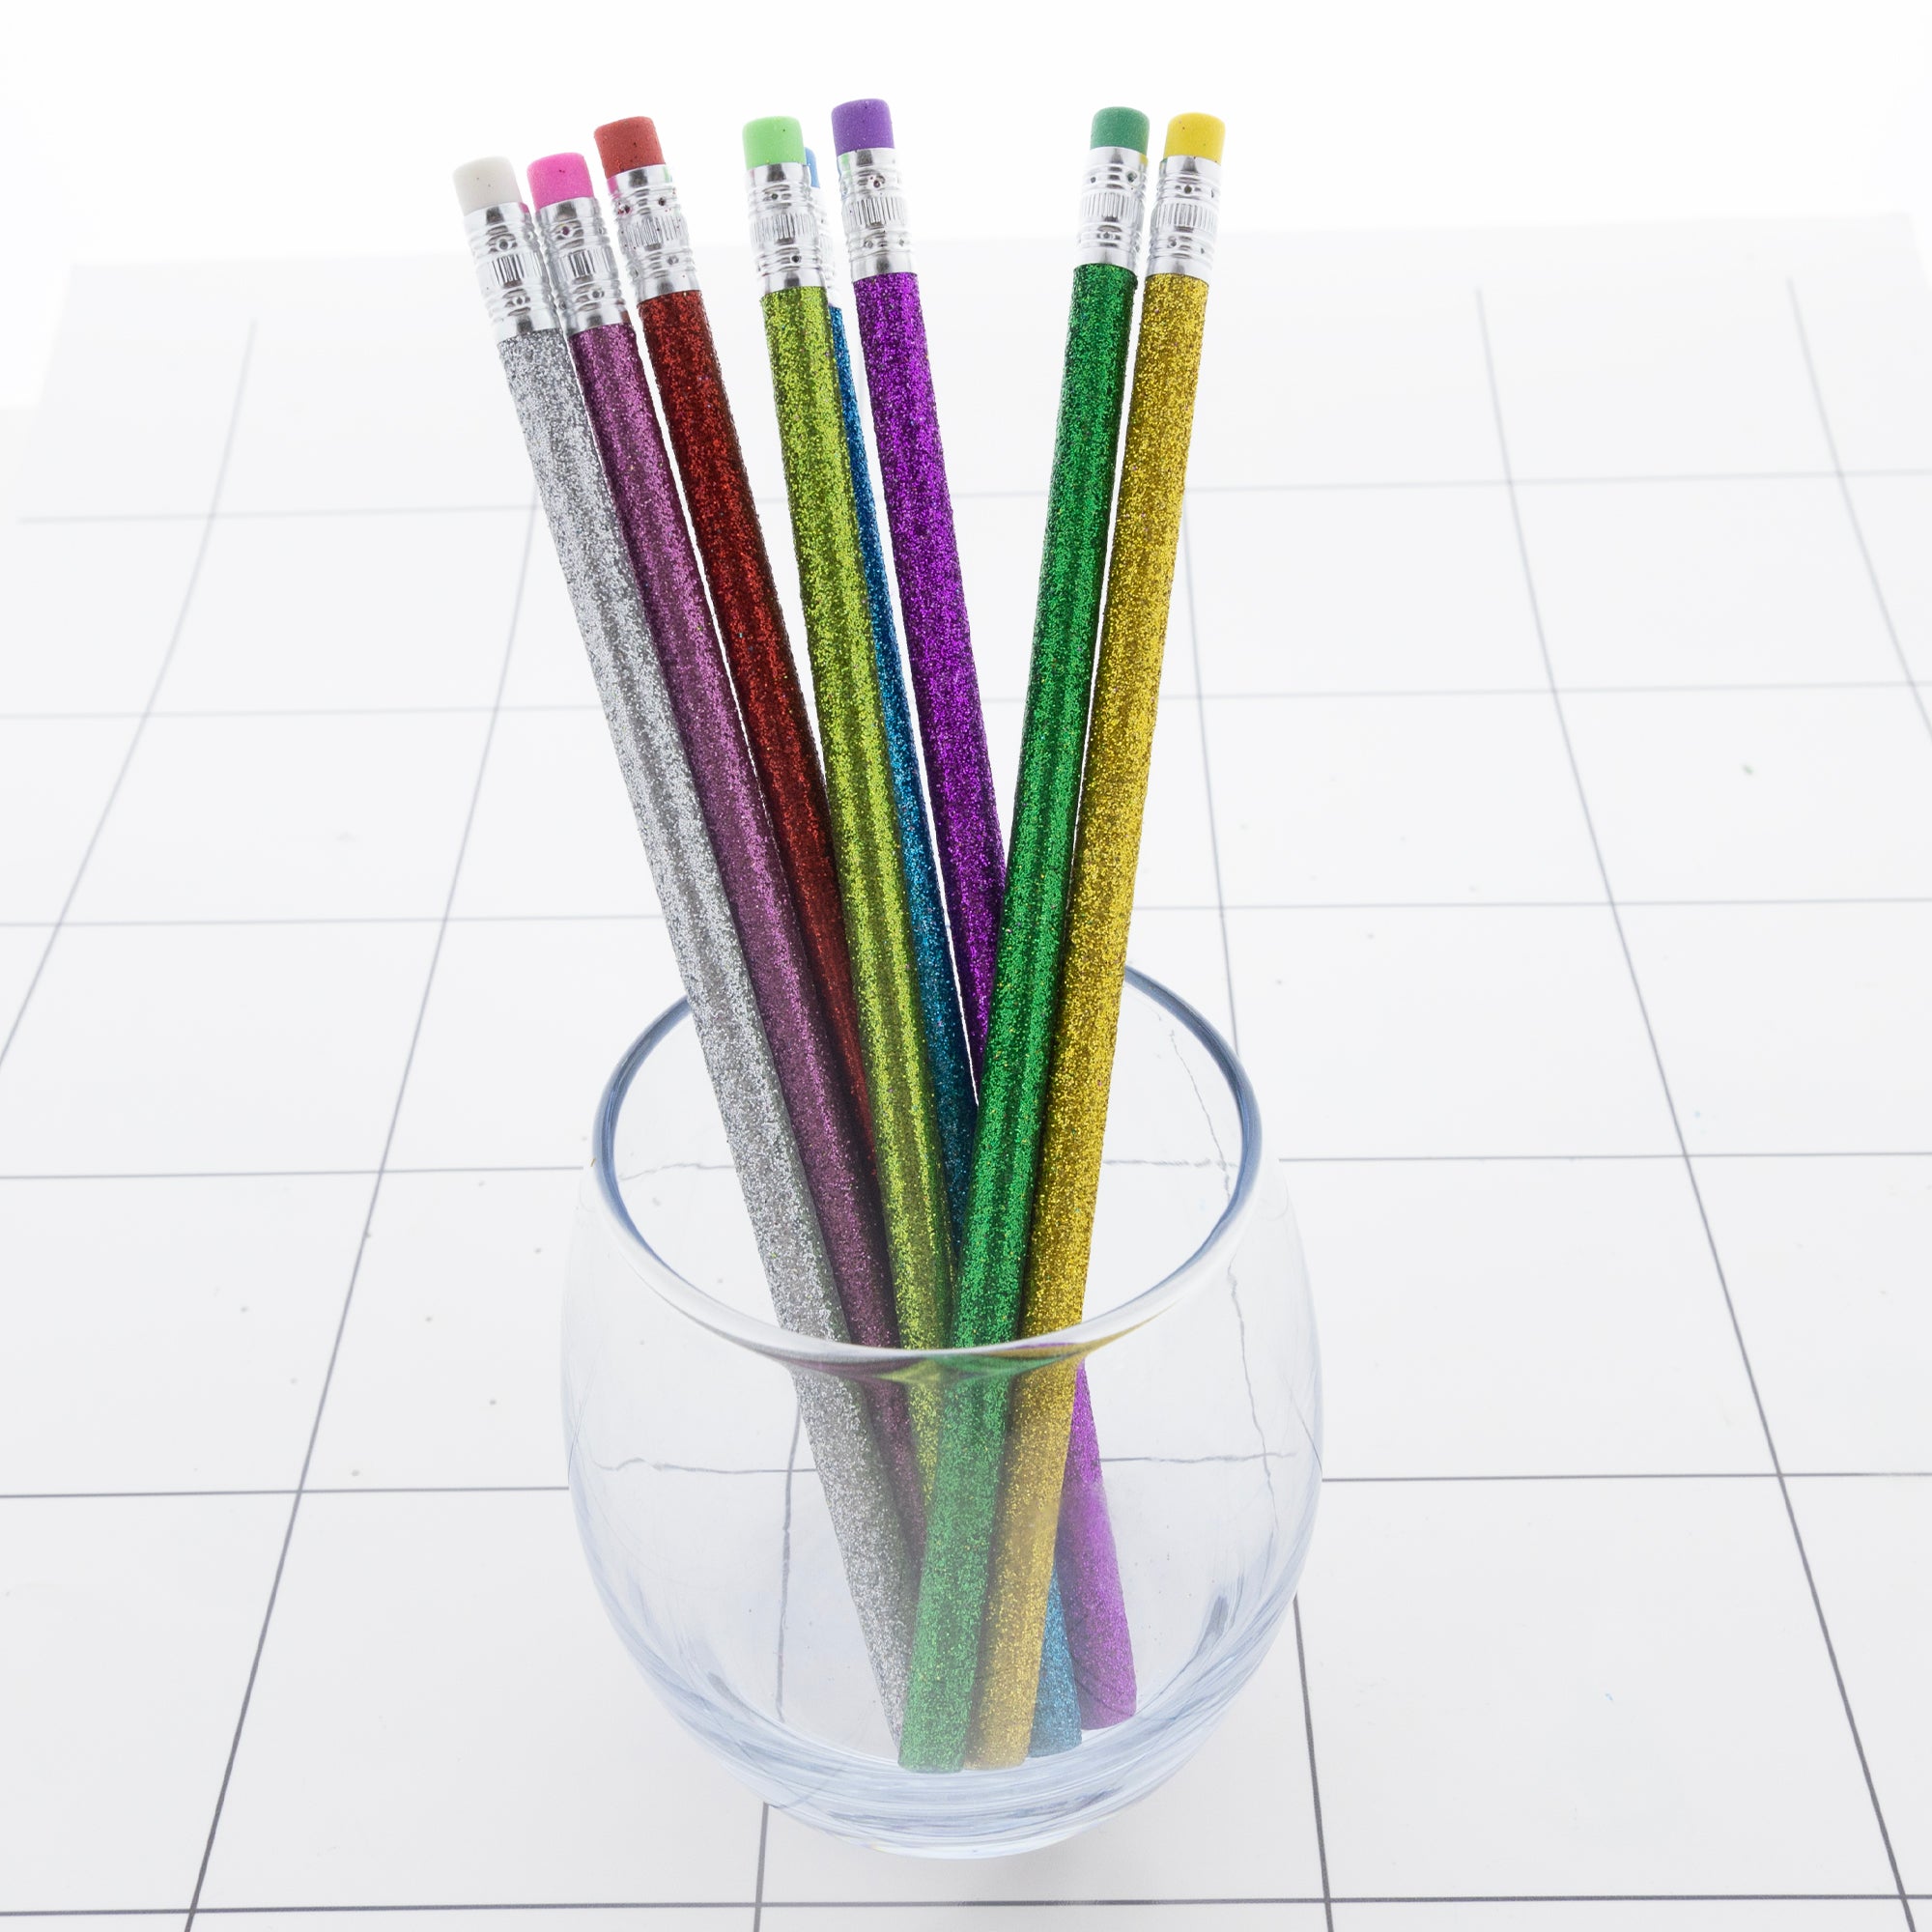 General Pencil Tri-Tip Eraser